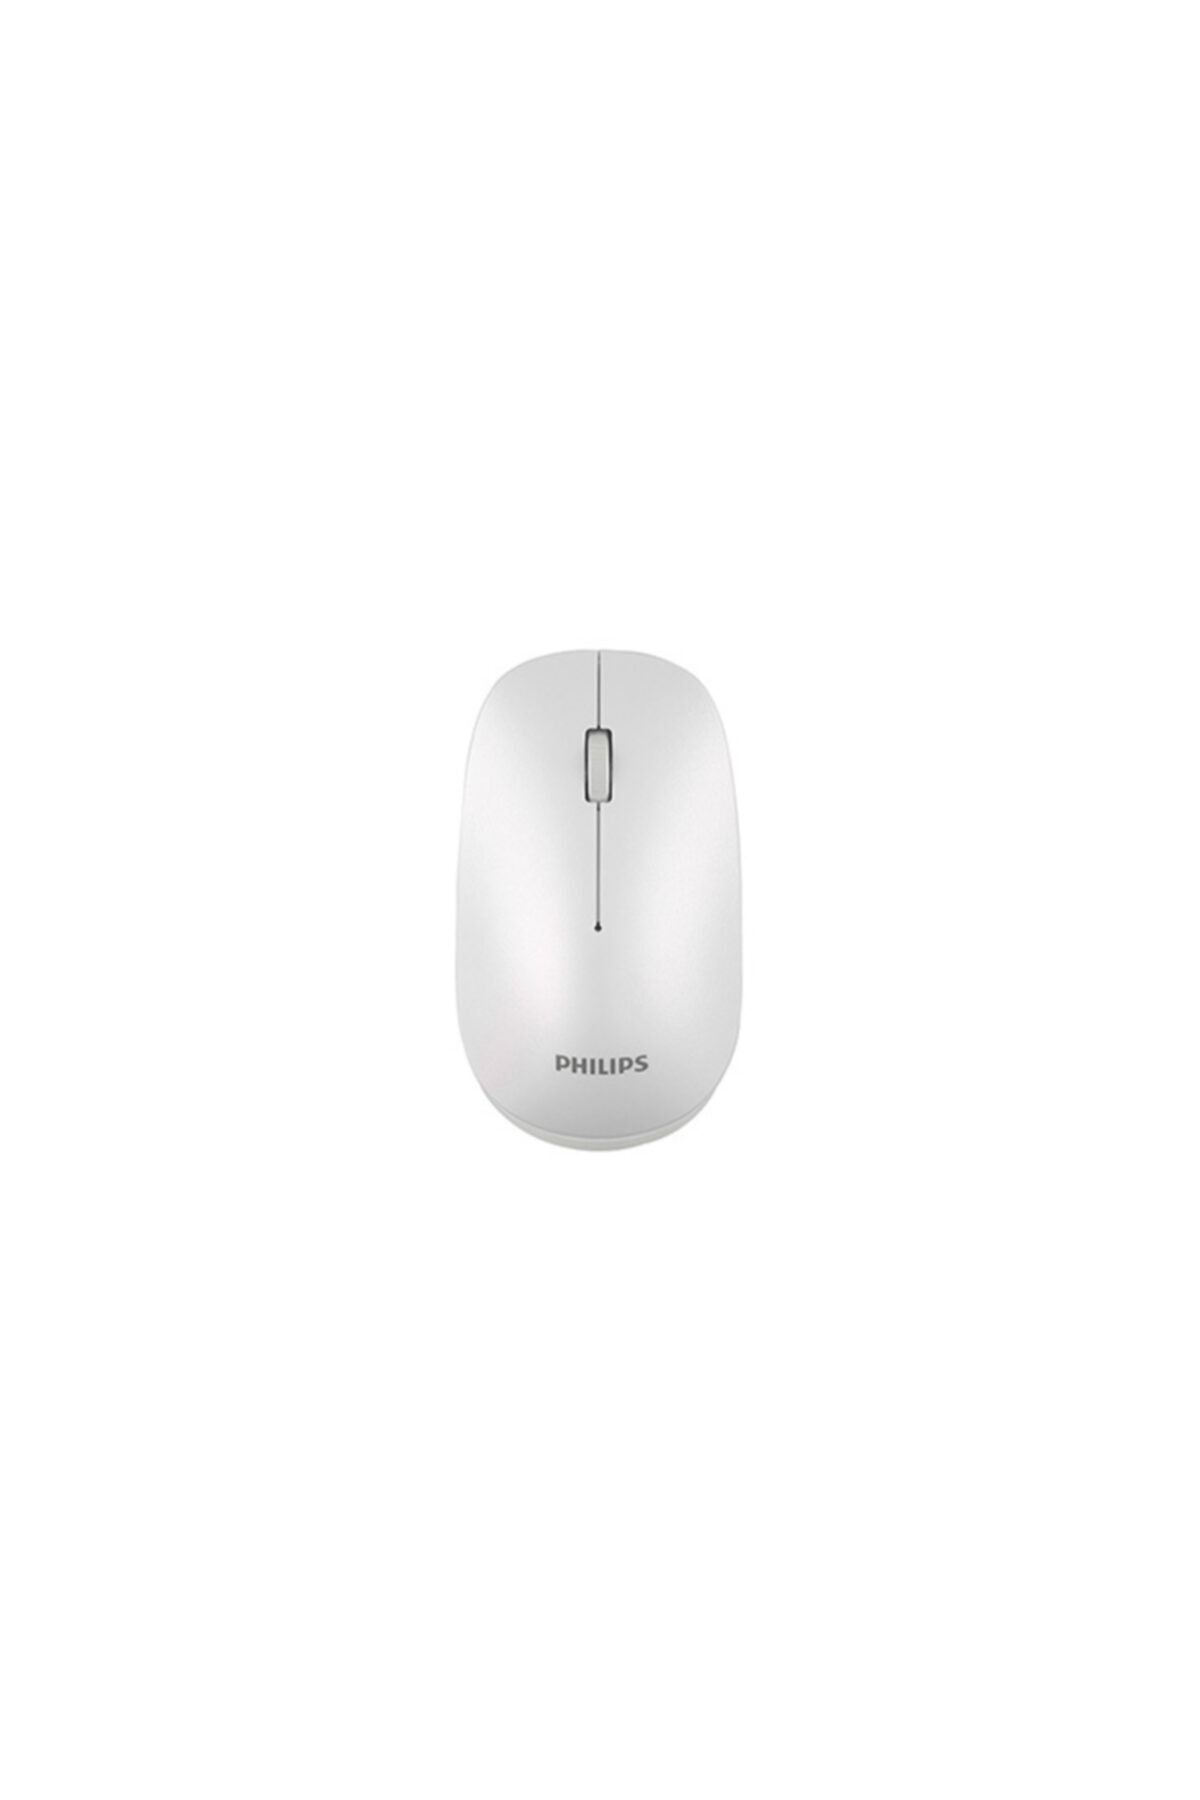 Philips Spk7305 2.4ghz Beyaz 800/1000/1200/1600dpi Kablosuz Mouse